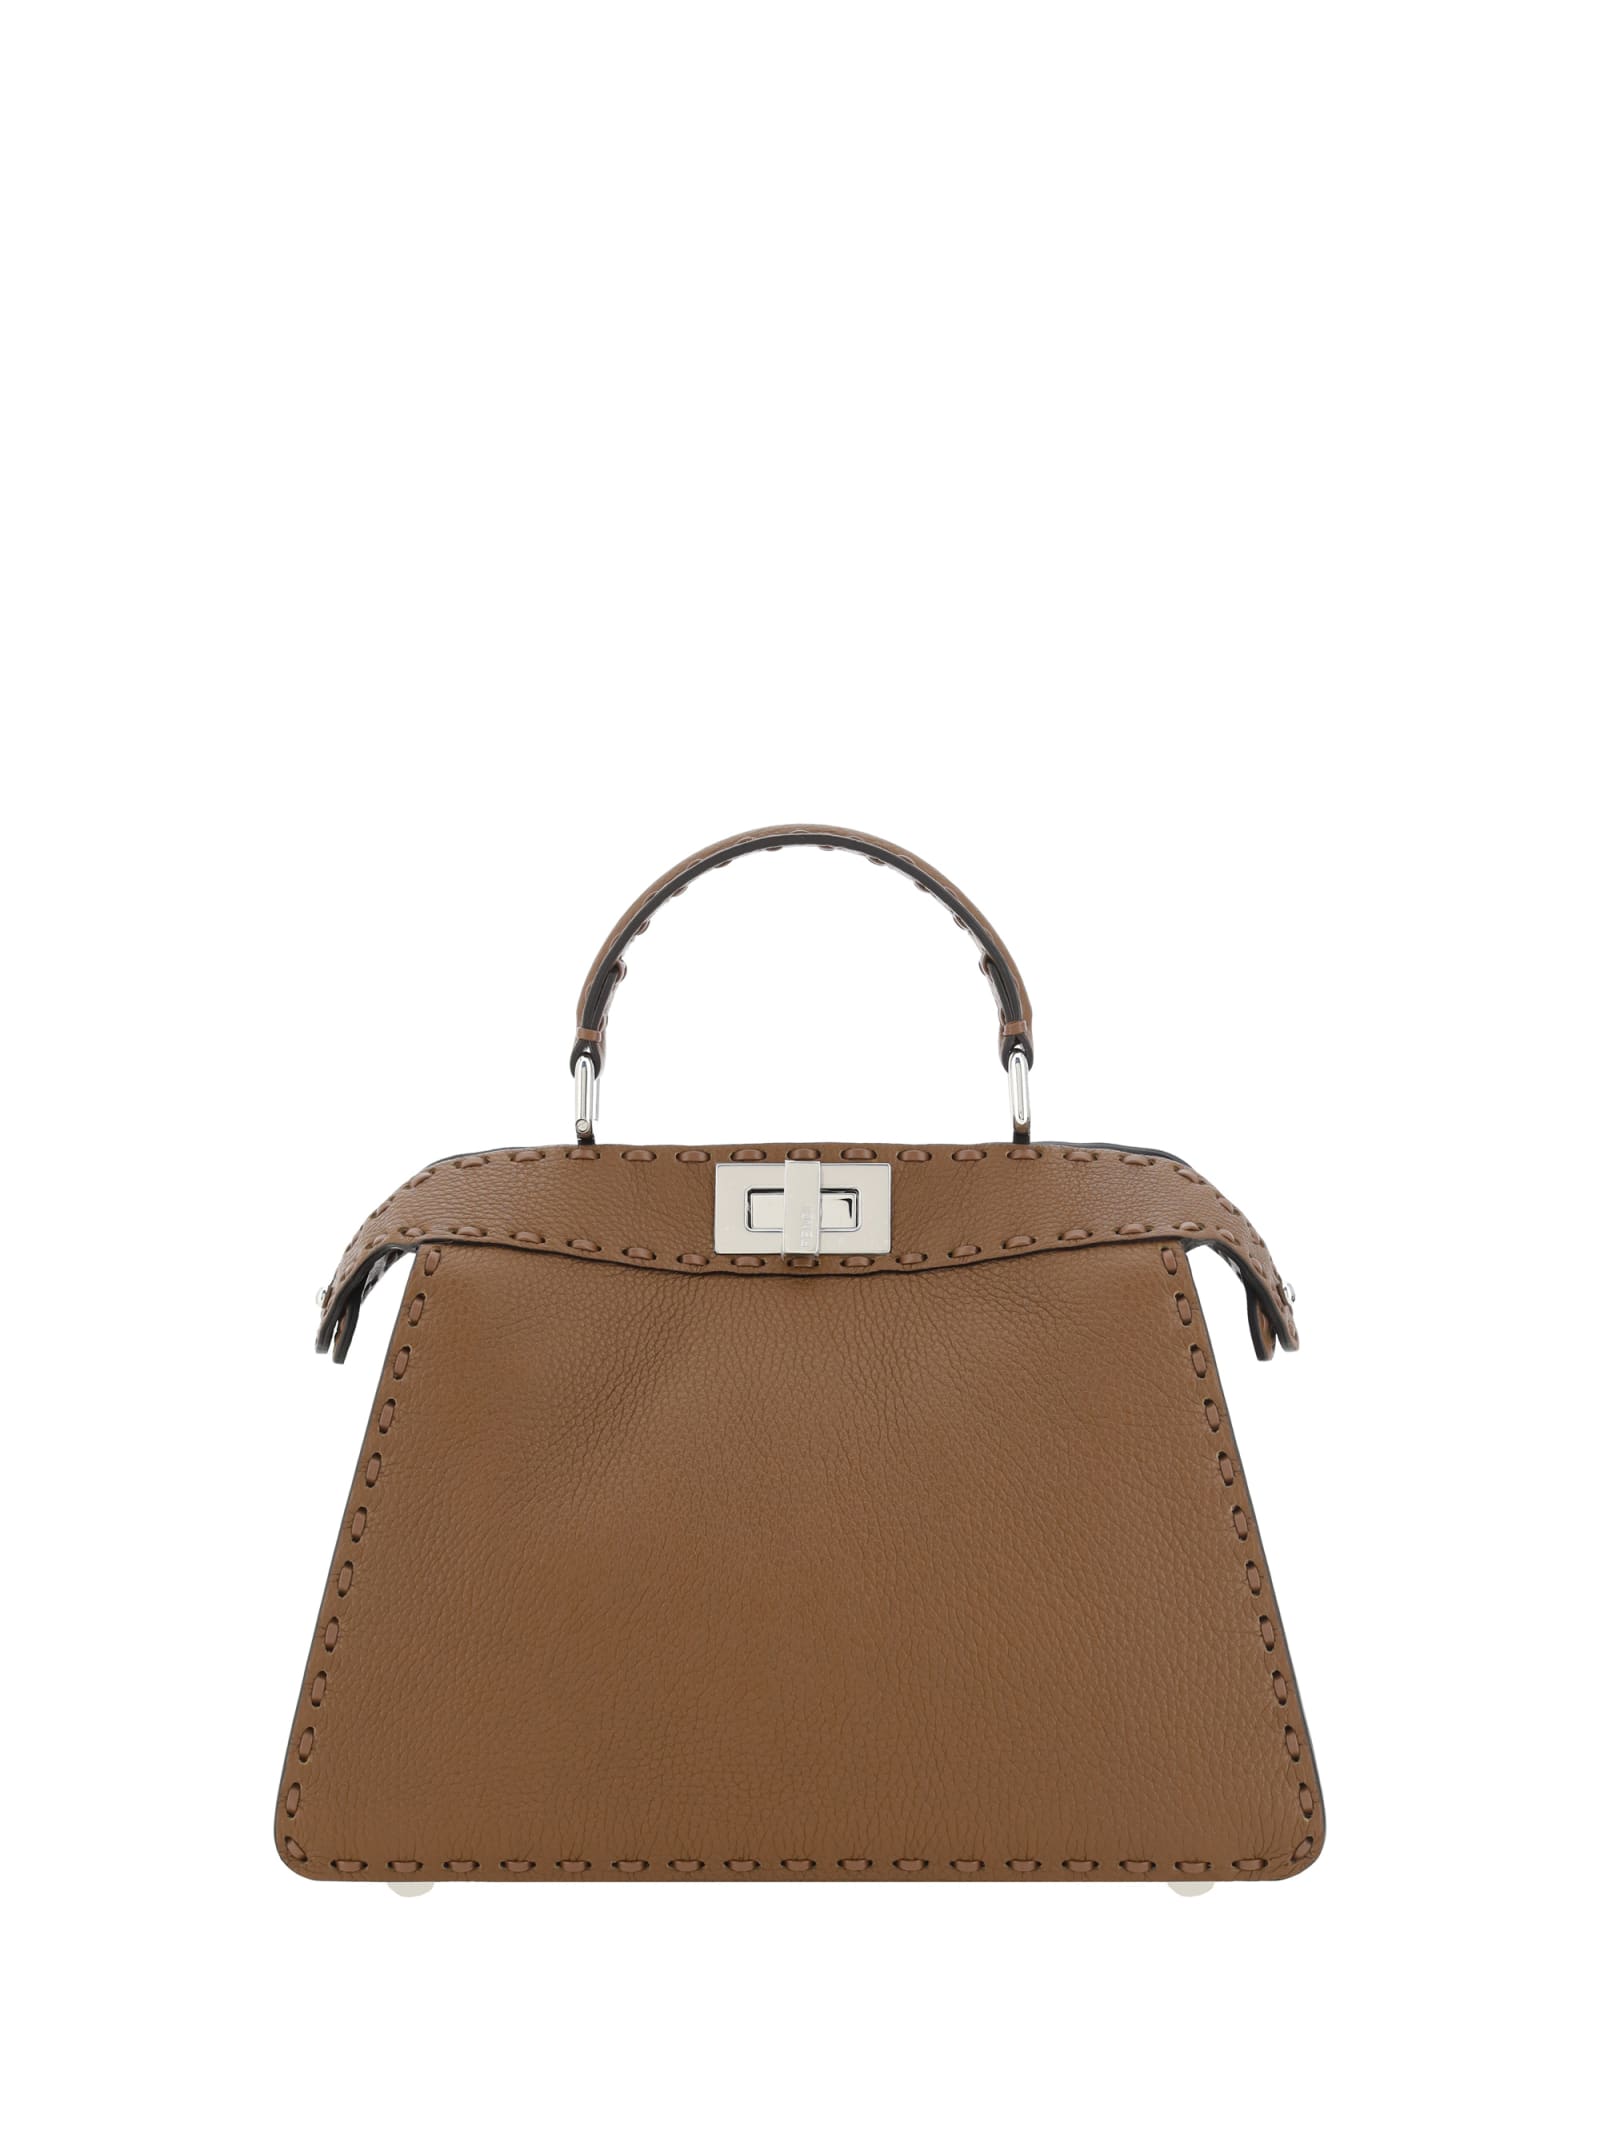 Fendi Peekaboo Handbag In Brown